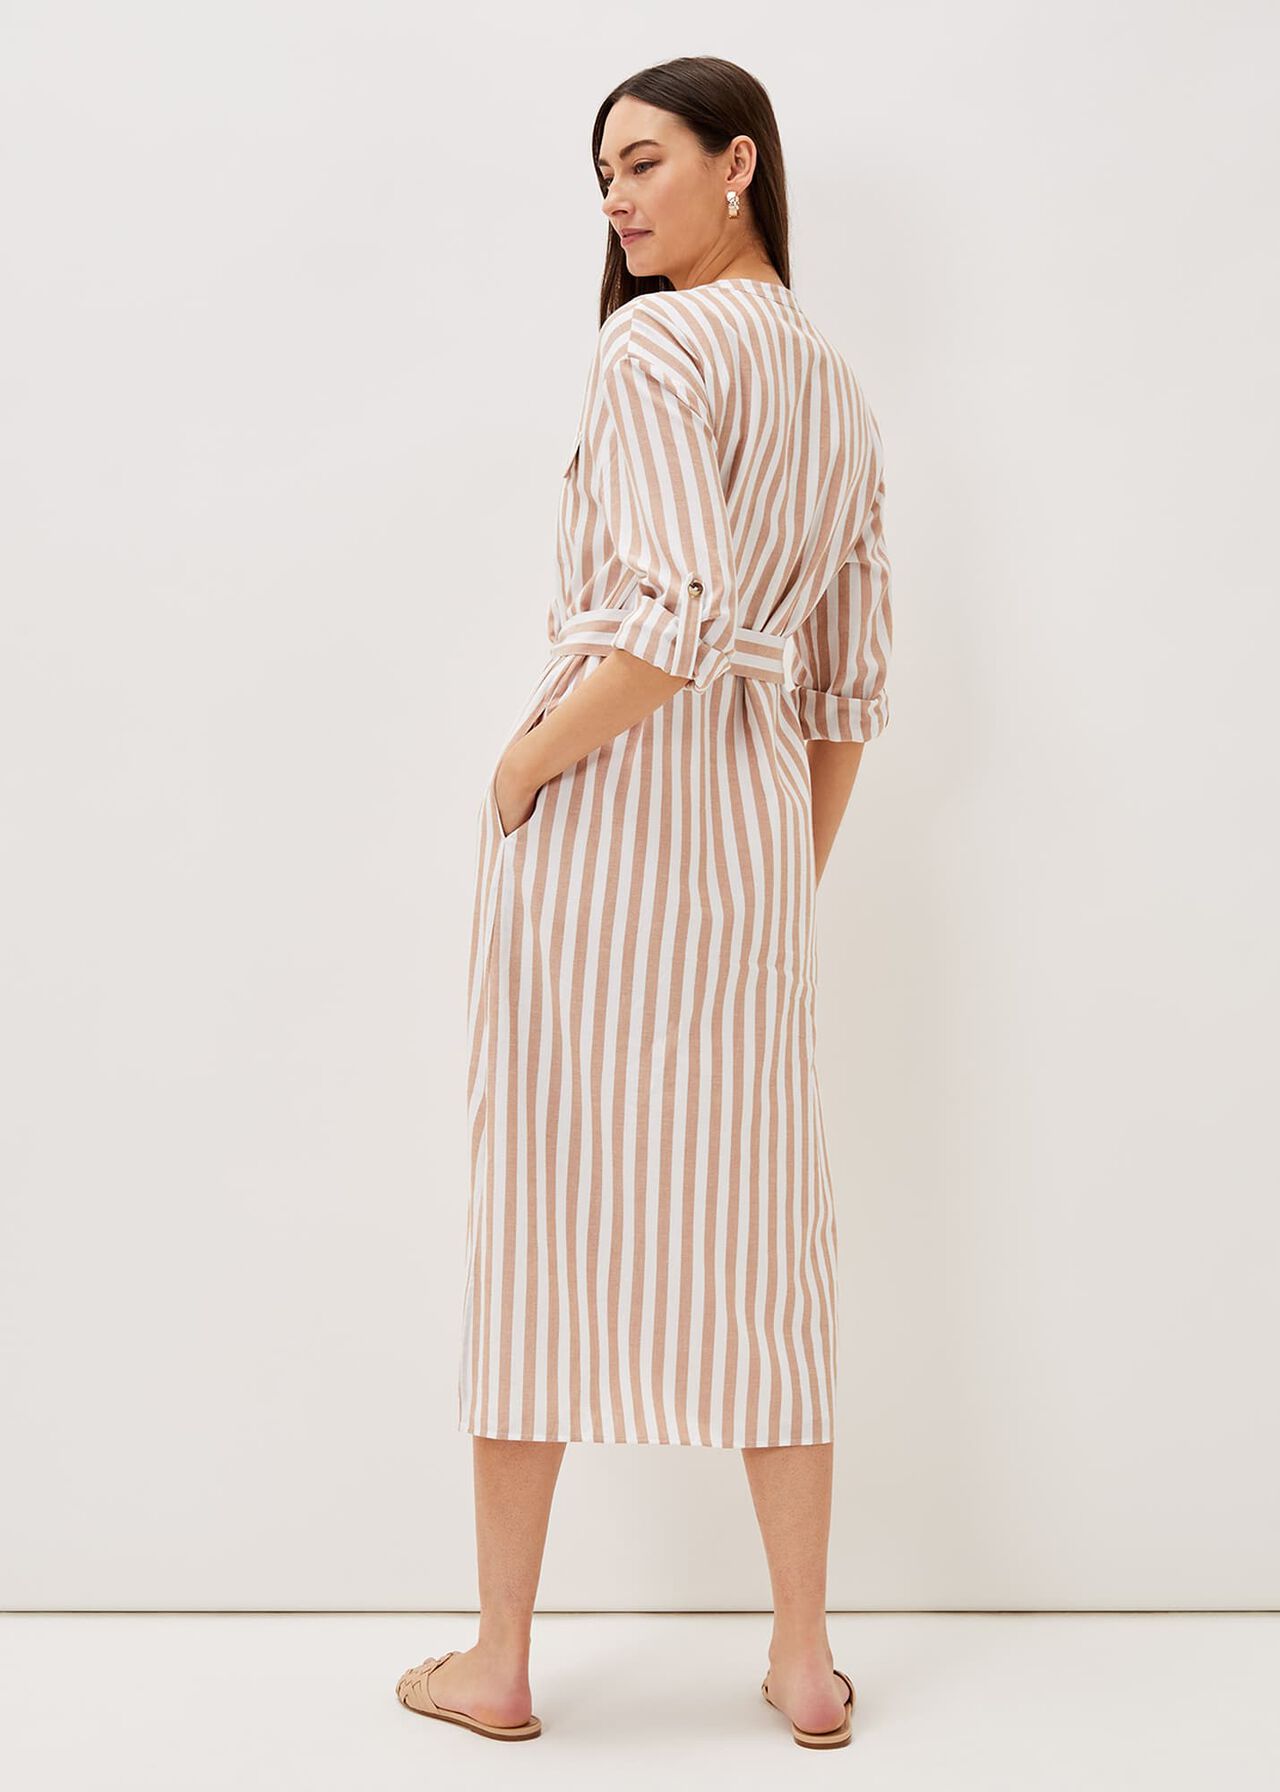 Ayden Stripe Dress